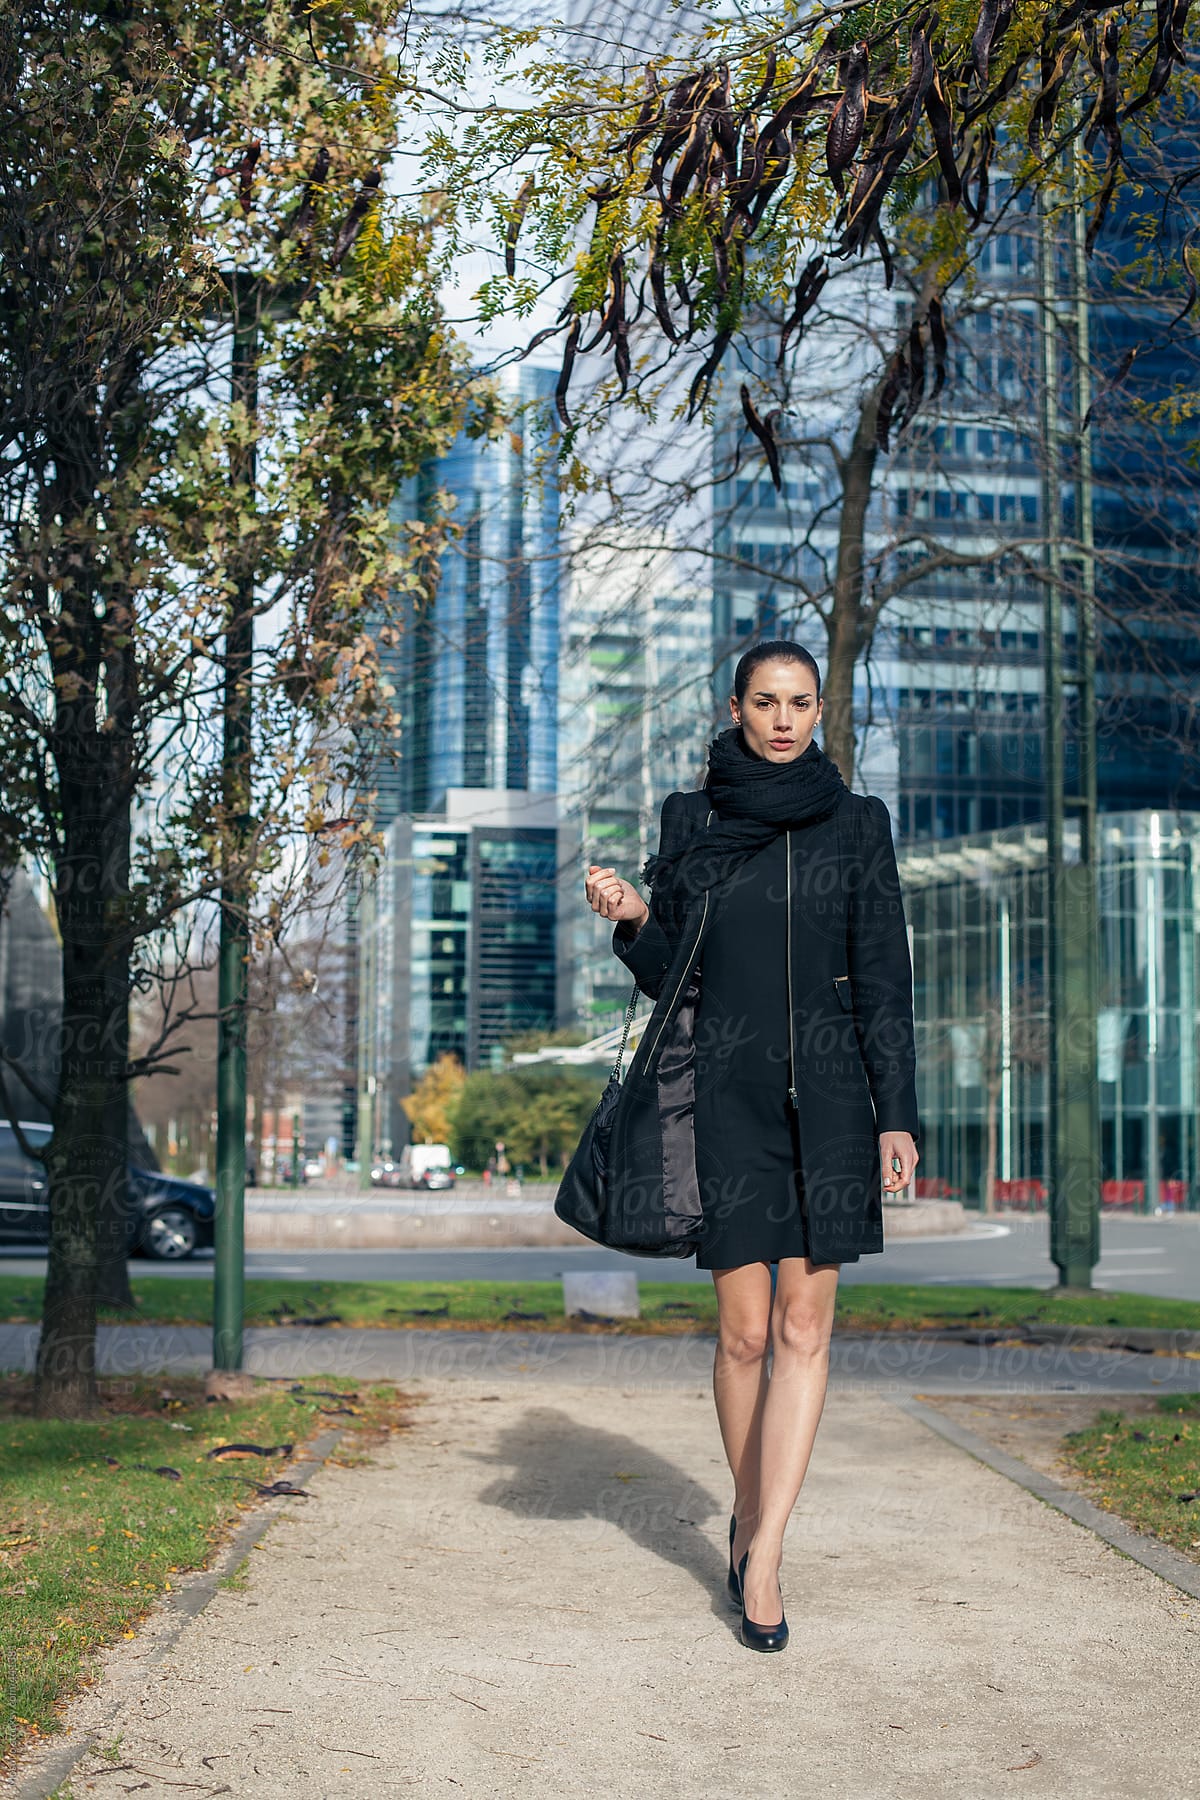 Elegant Woman Walking Down The Street by Stocksy Contributor